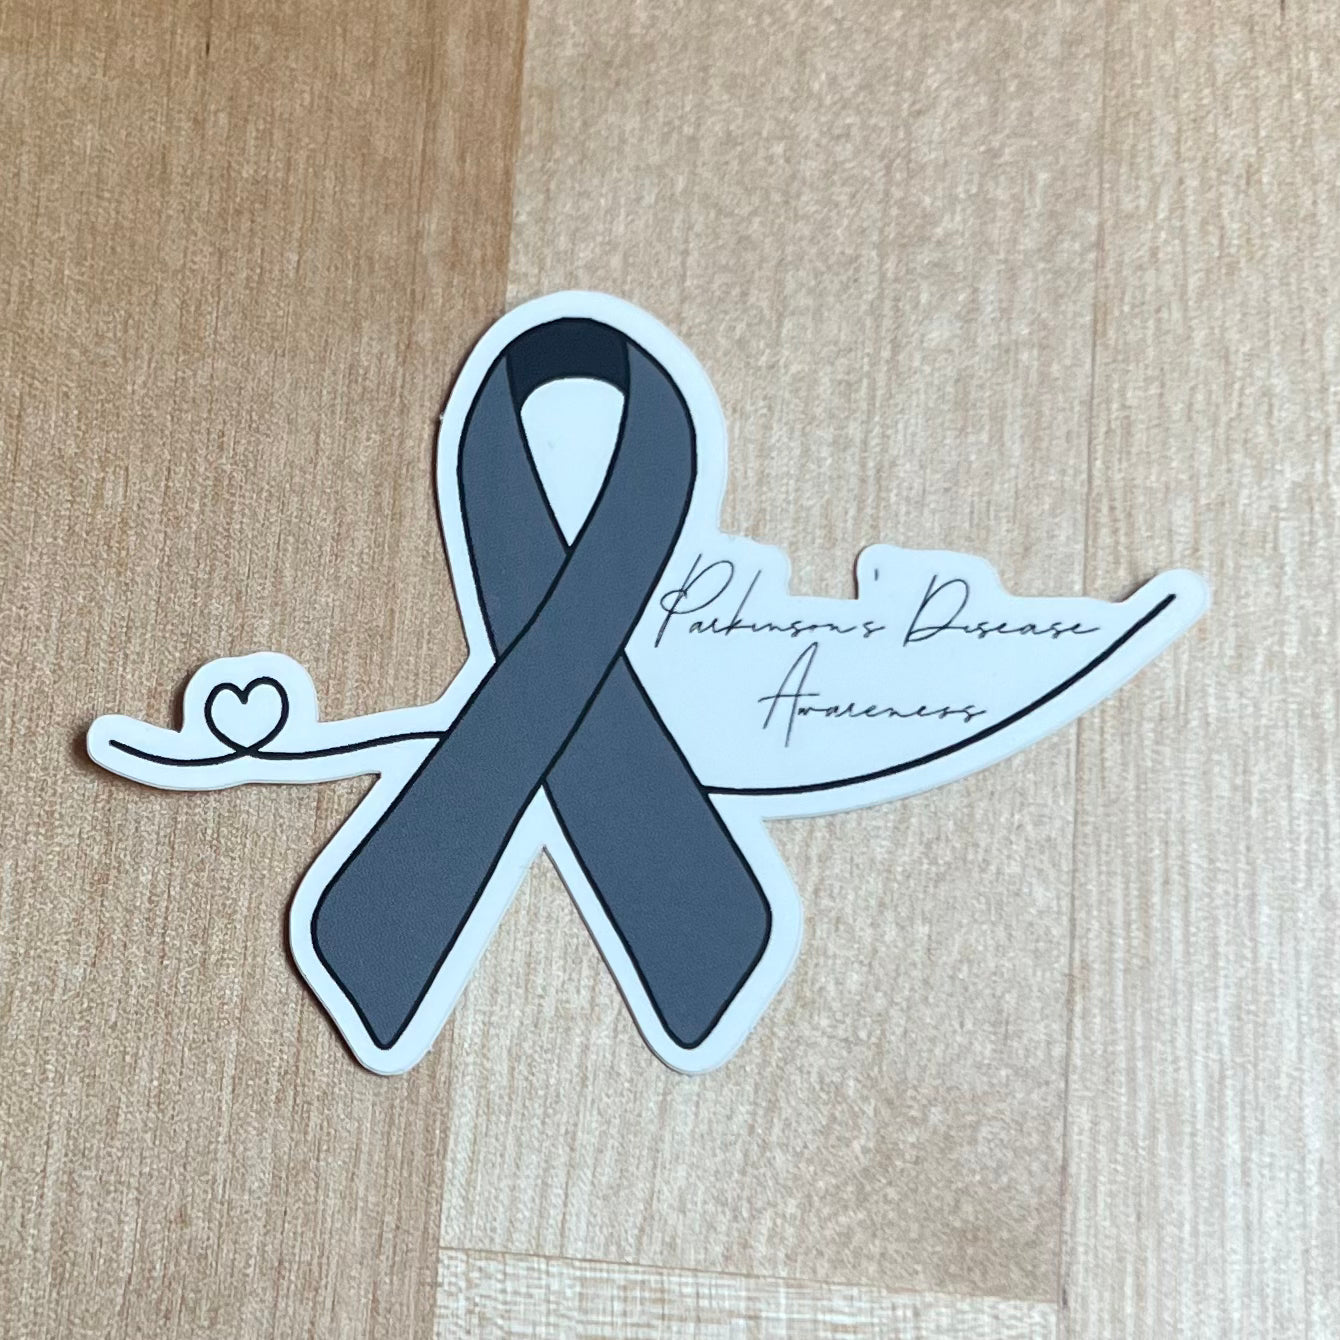 Parkinson’s Disease Awareness Sticker